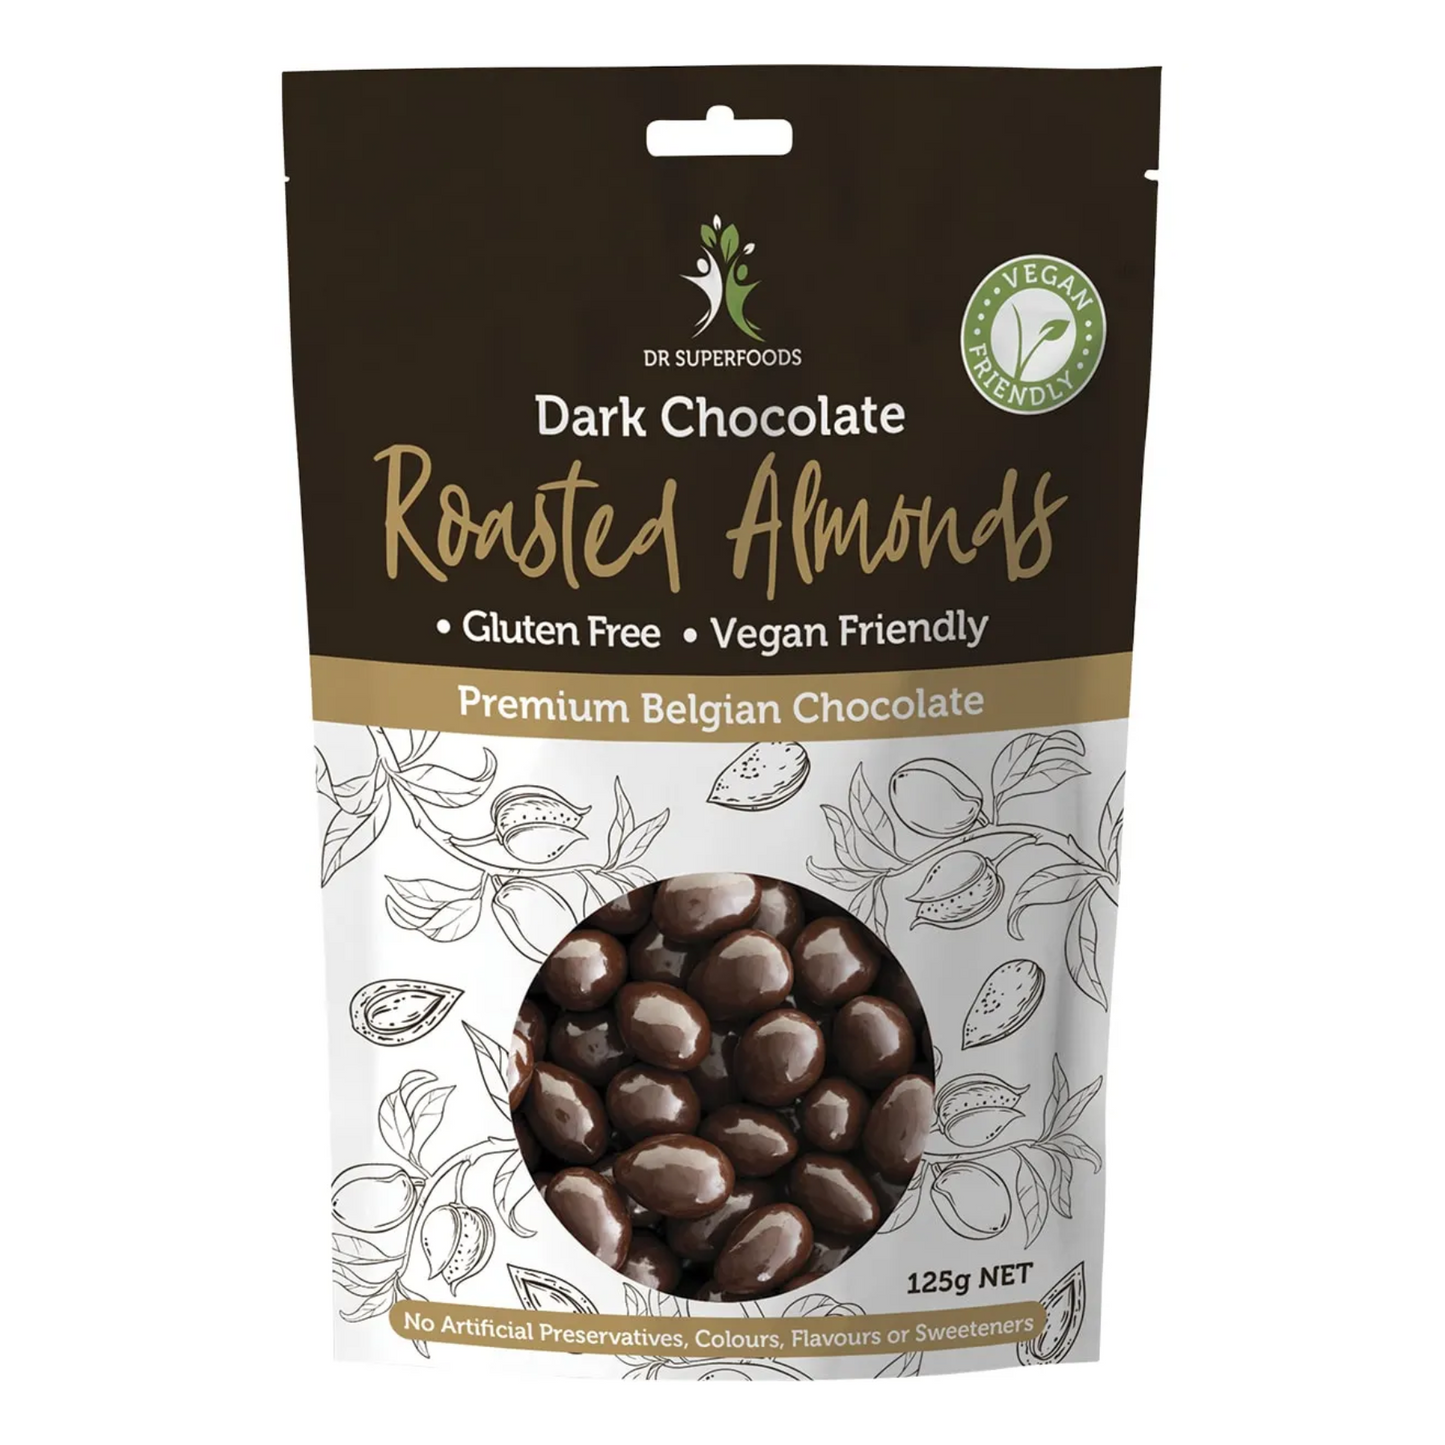 Dr Superfoods Dark Chocolate Coated Almonds 125g, Premium Belgian Chocolate